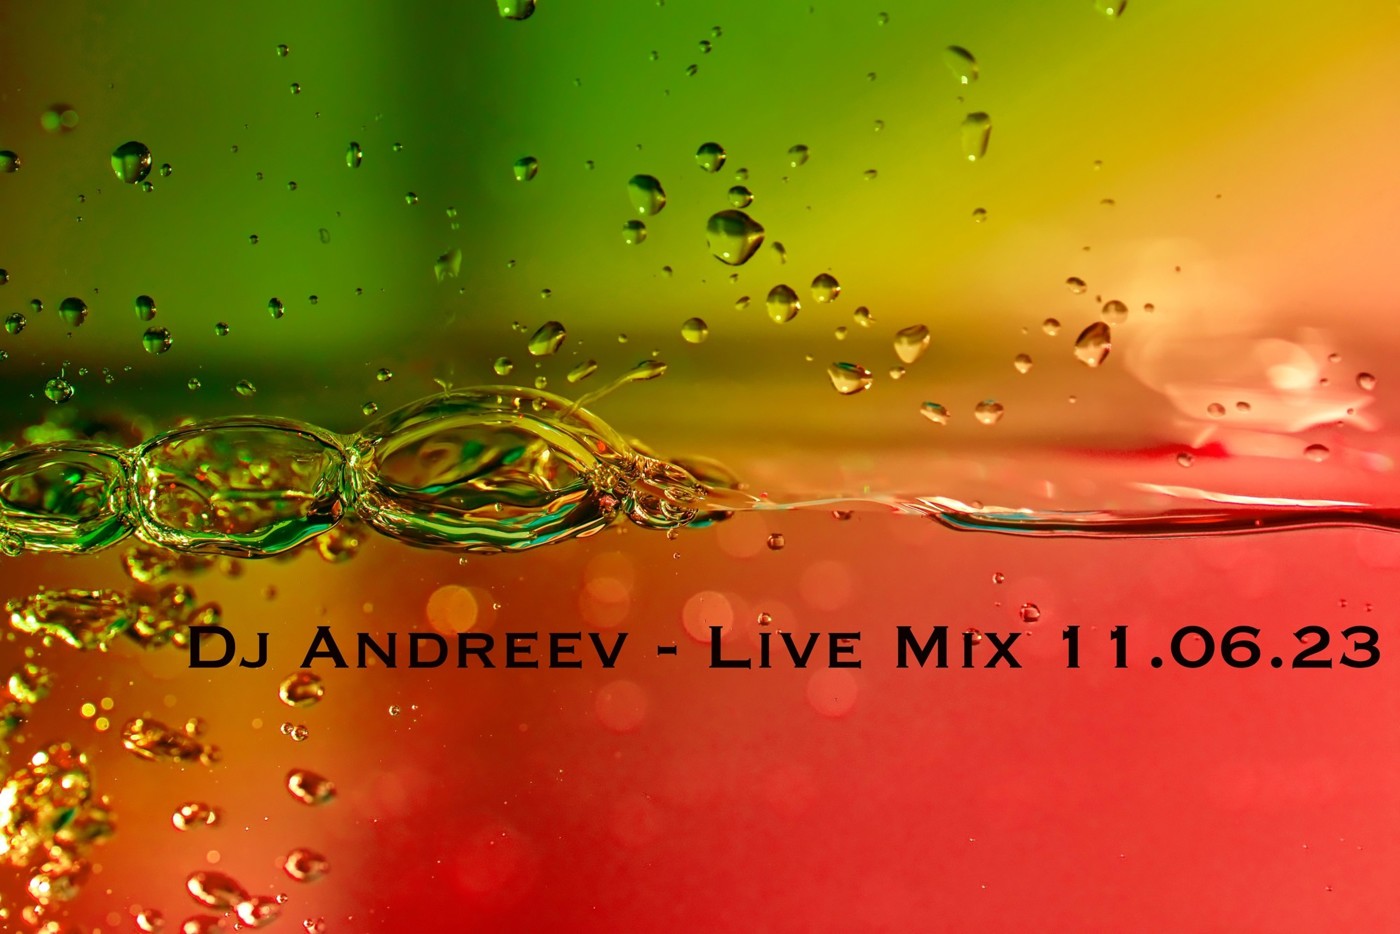 Dj Andreev - Live Mix 11.06.23